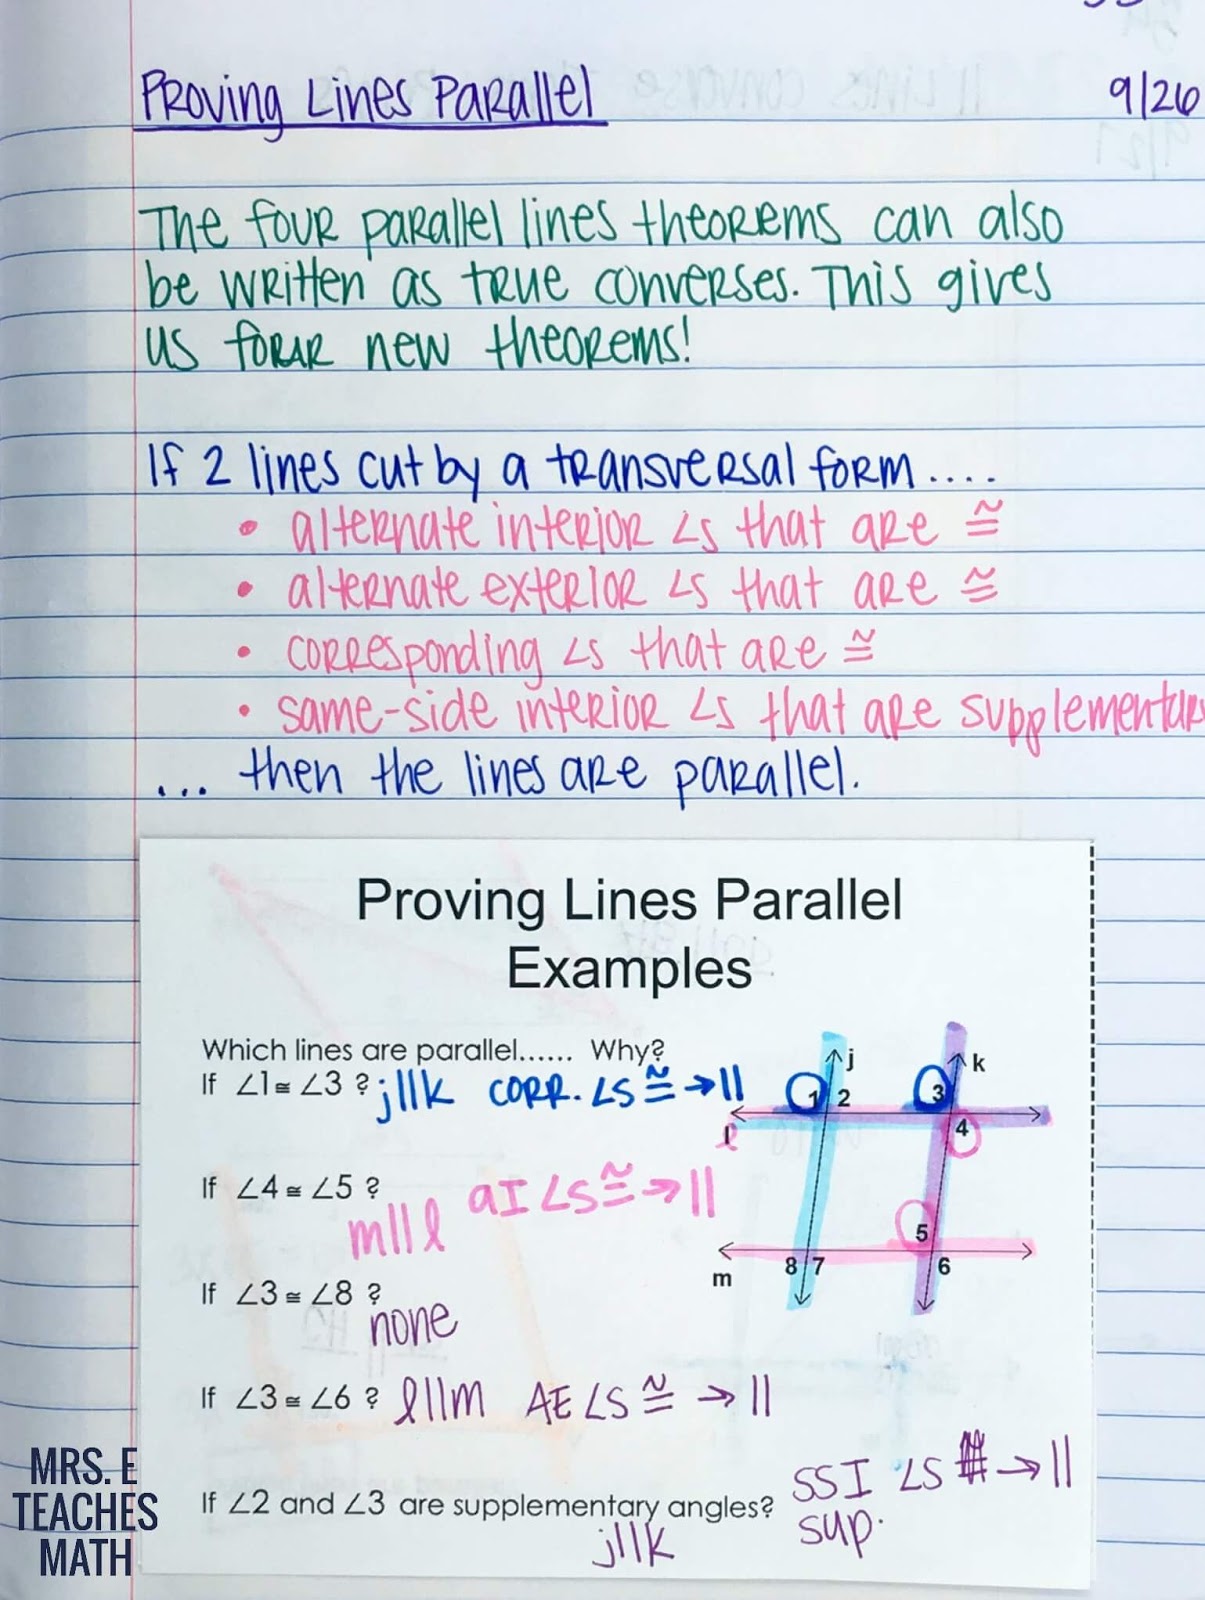 Proving Lines Parallel Worksheet / Proving Lines Parallel Ck 12